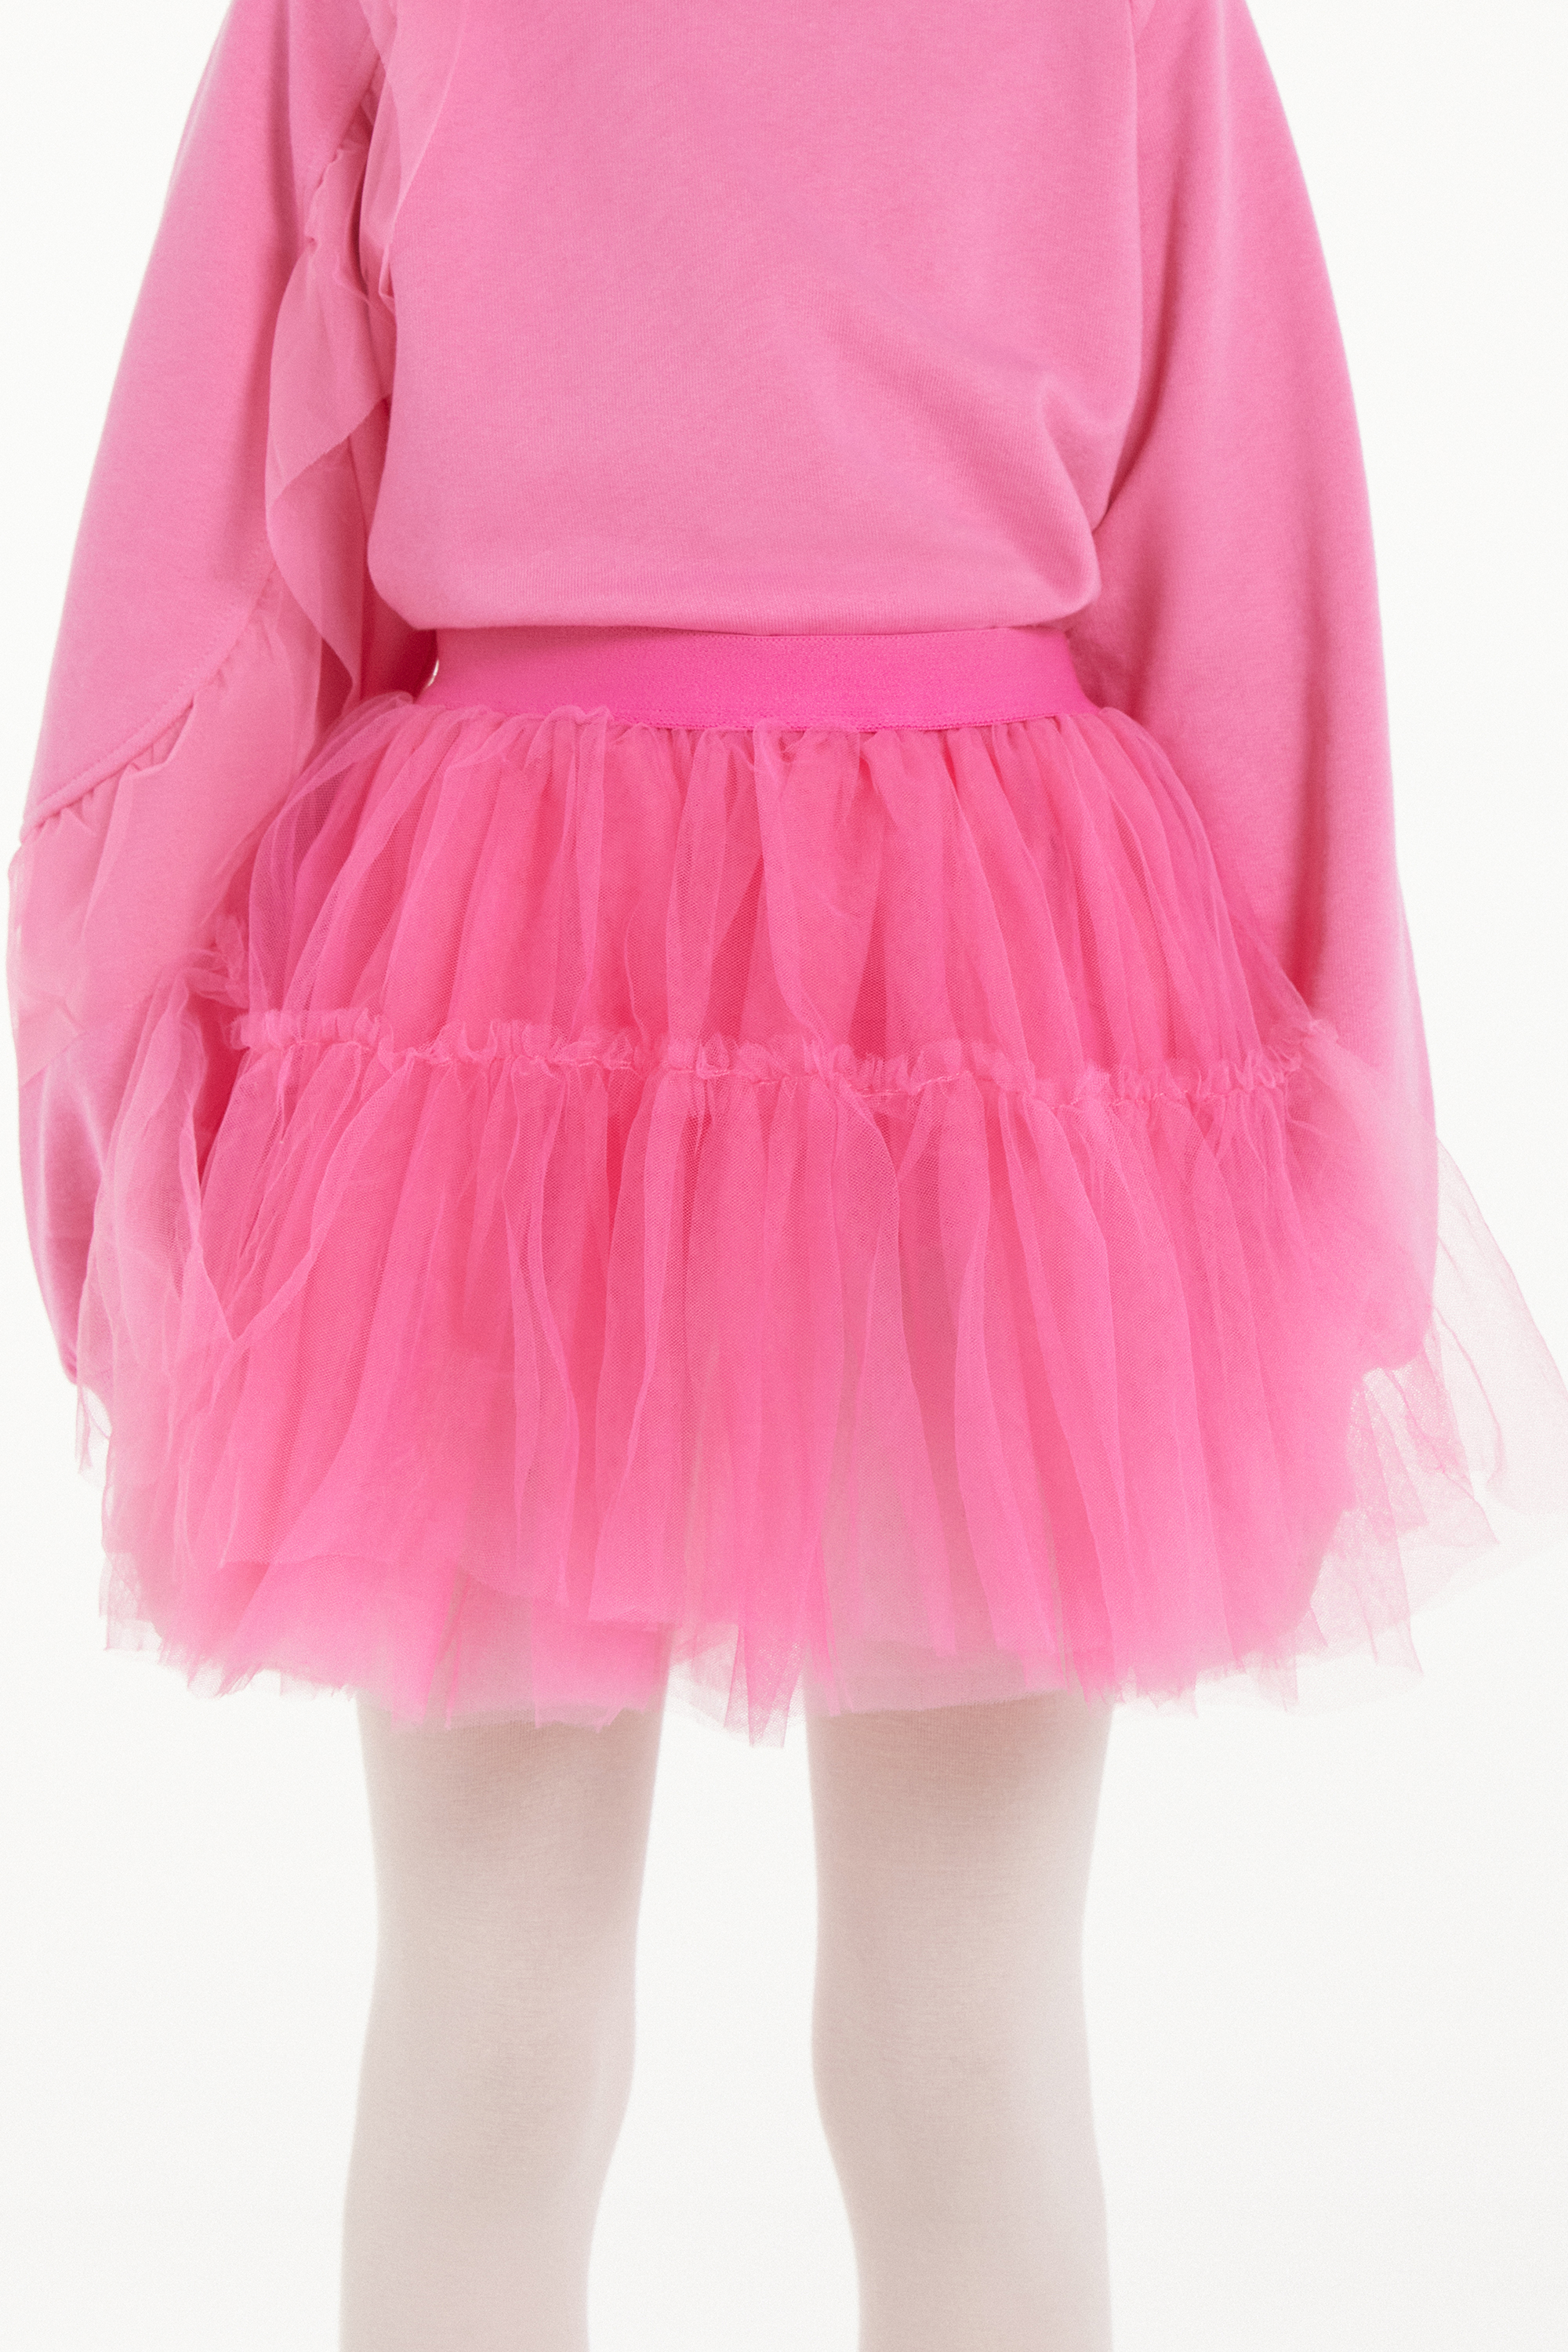 Minifalda de Tul de Bailarina para Niña